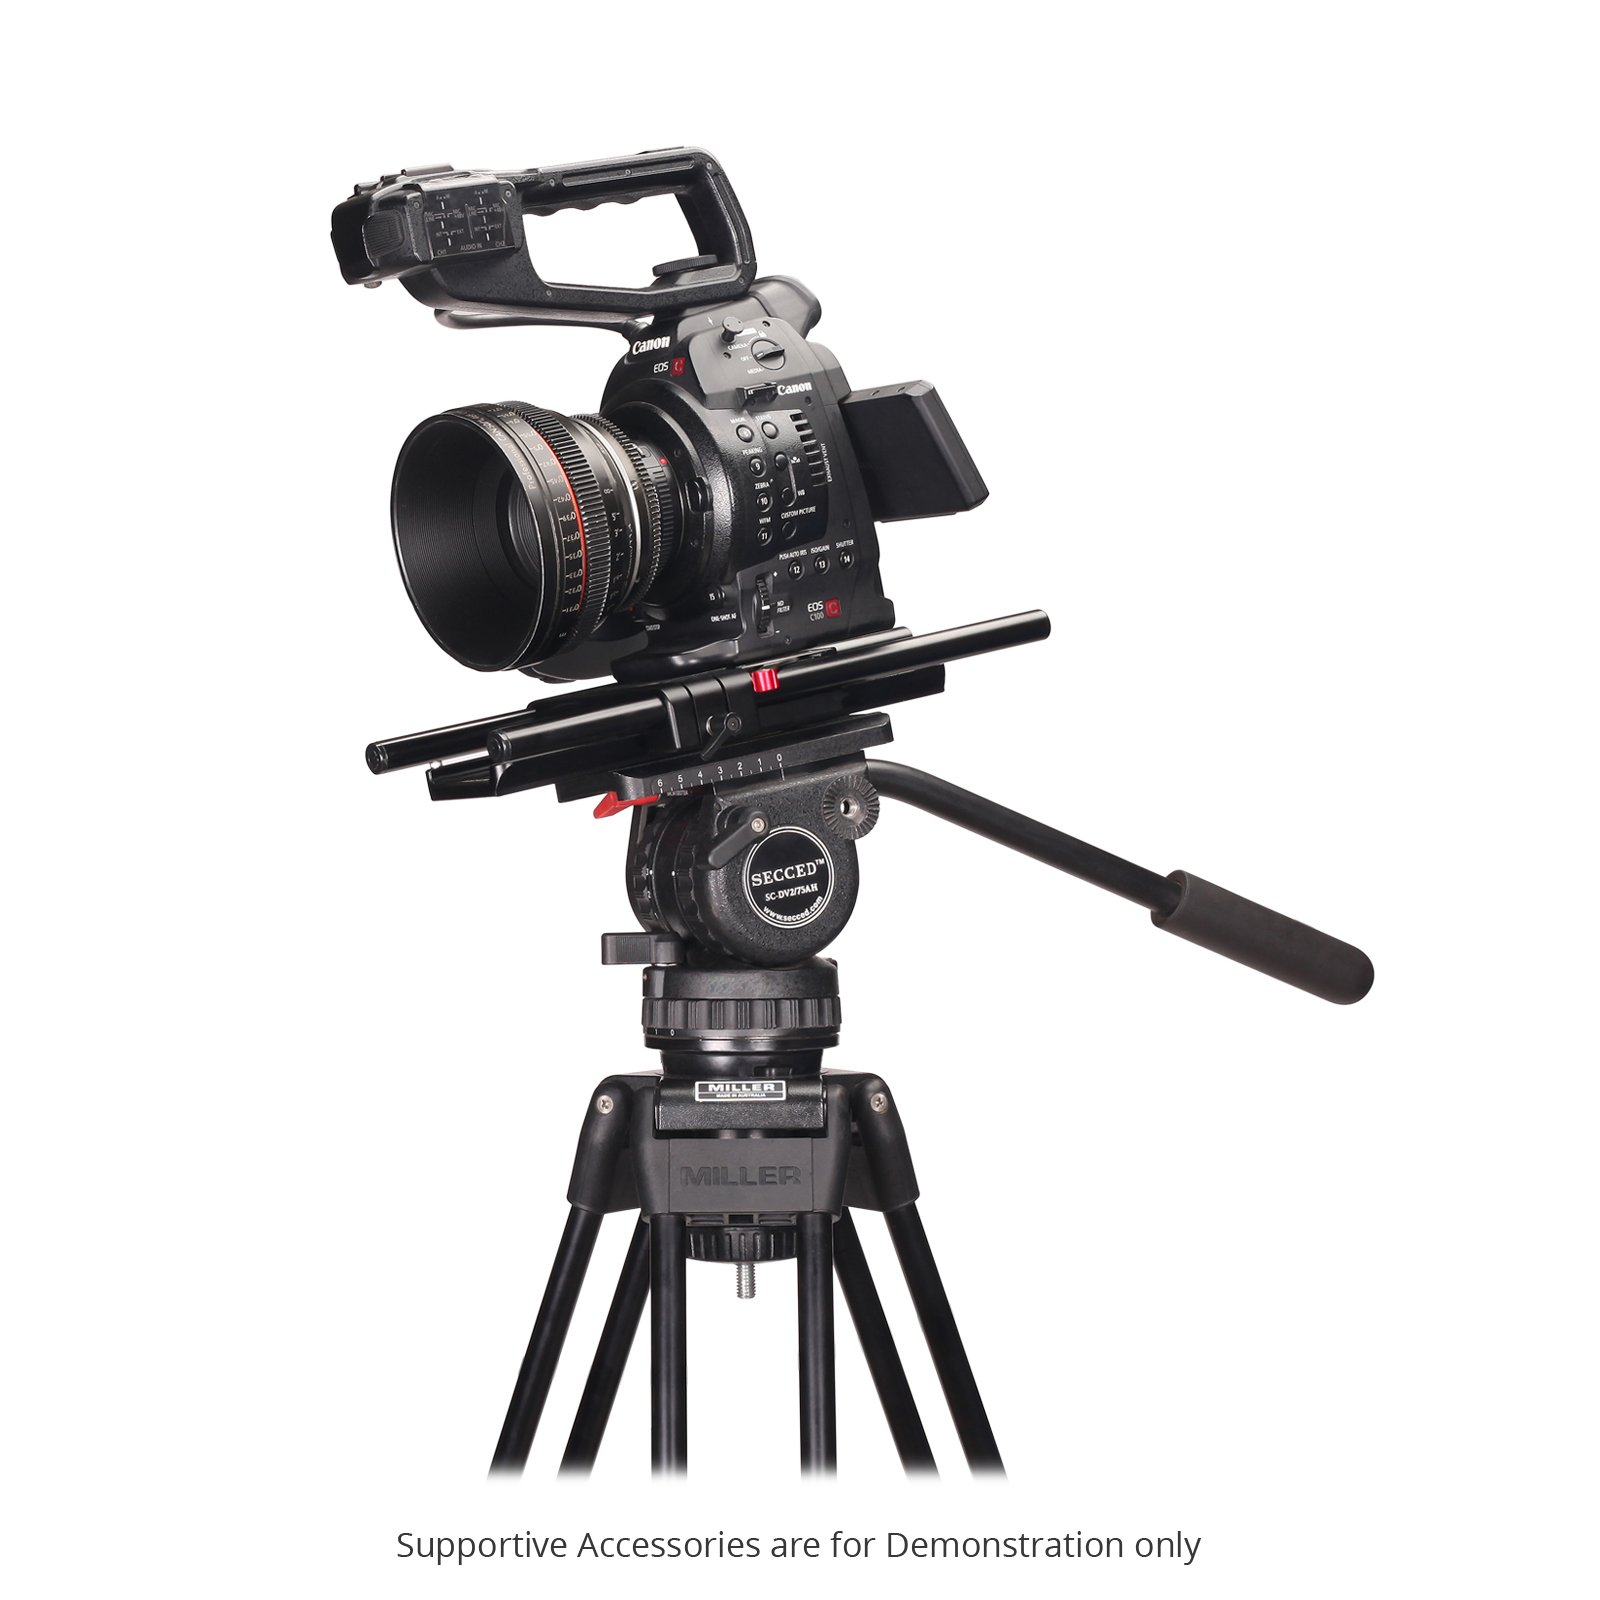 Proaim 15mm Quick Release Camera Base Plate with Dovetail (ARRI Standard) Baseplate มาตรฐาน Arri พร้อมช่องใส่ Rod 15 mm ราคา 8990 บาท